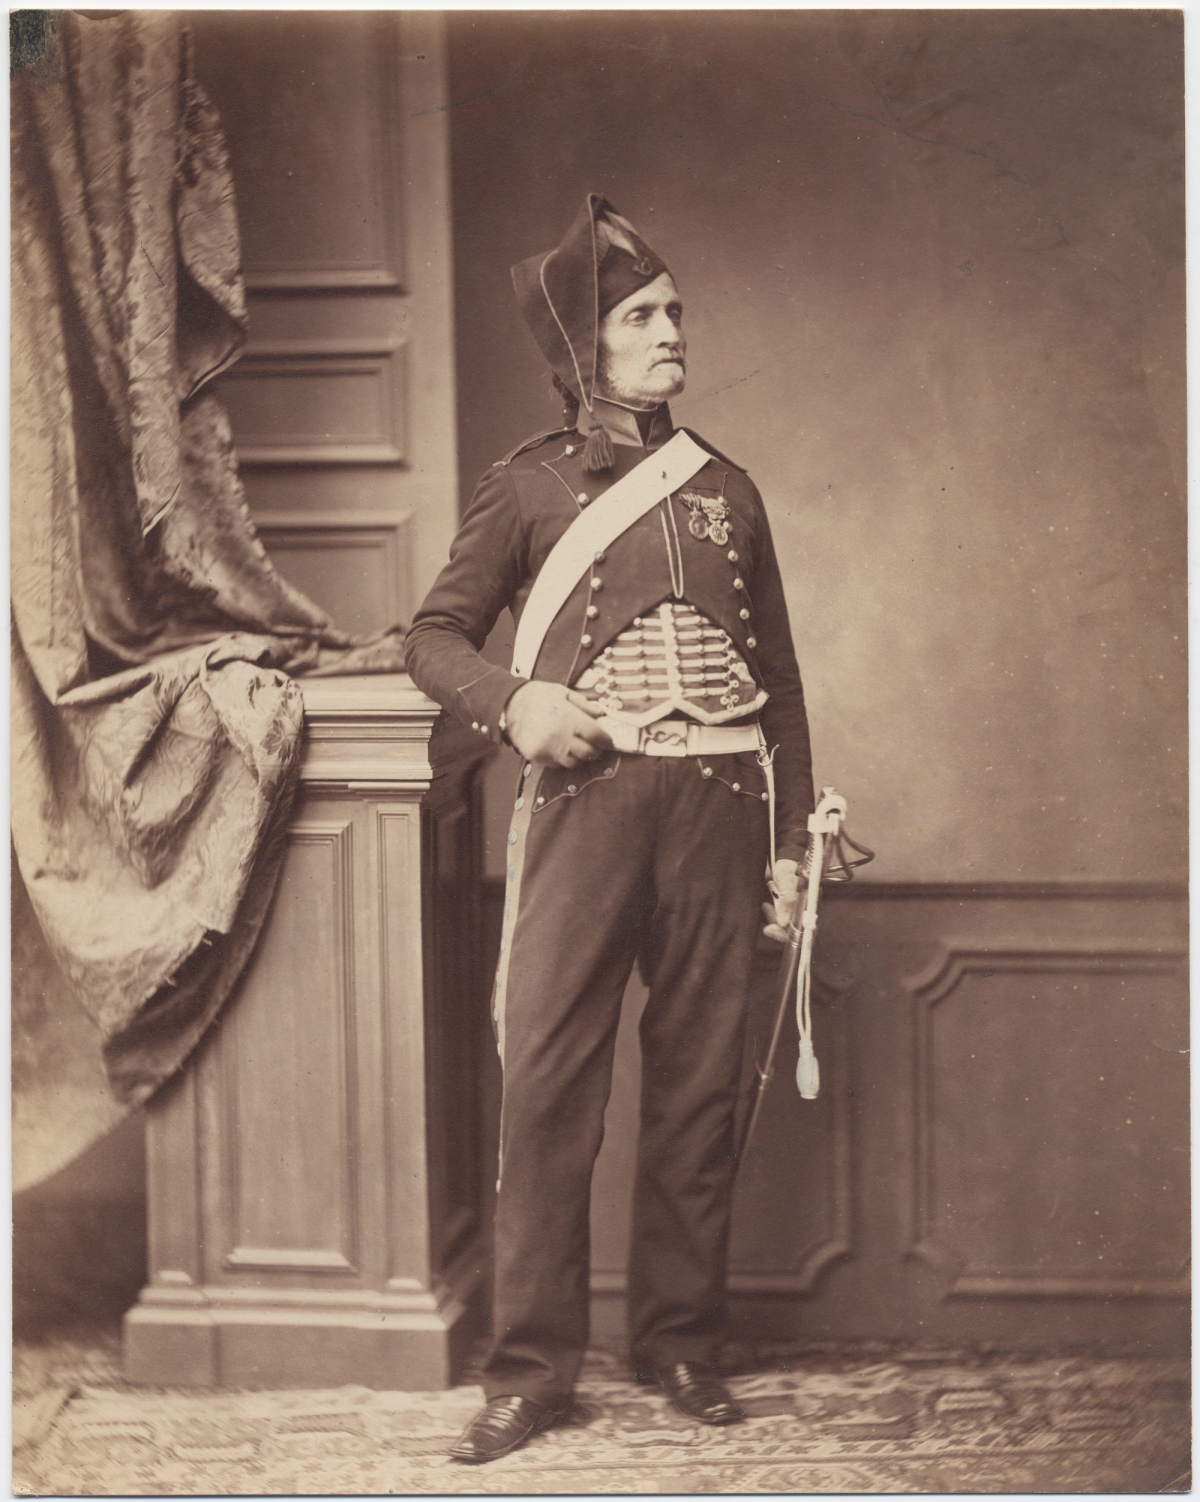 Monsieur Schmit, 2nd Mounted Chasseur Regiment